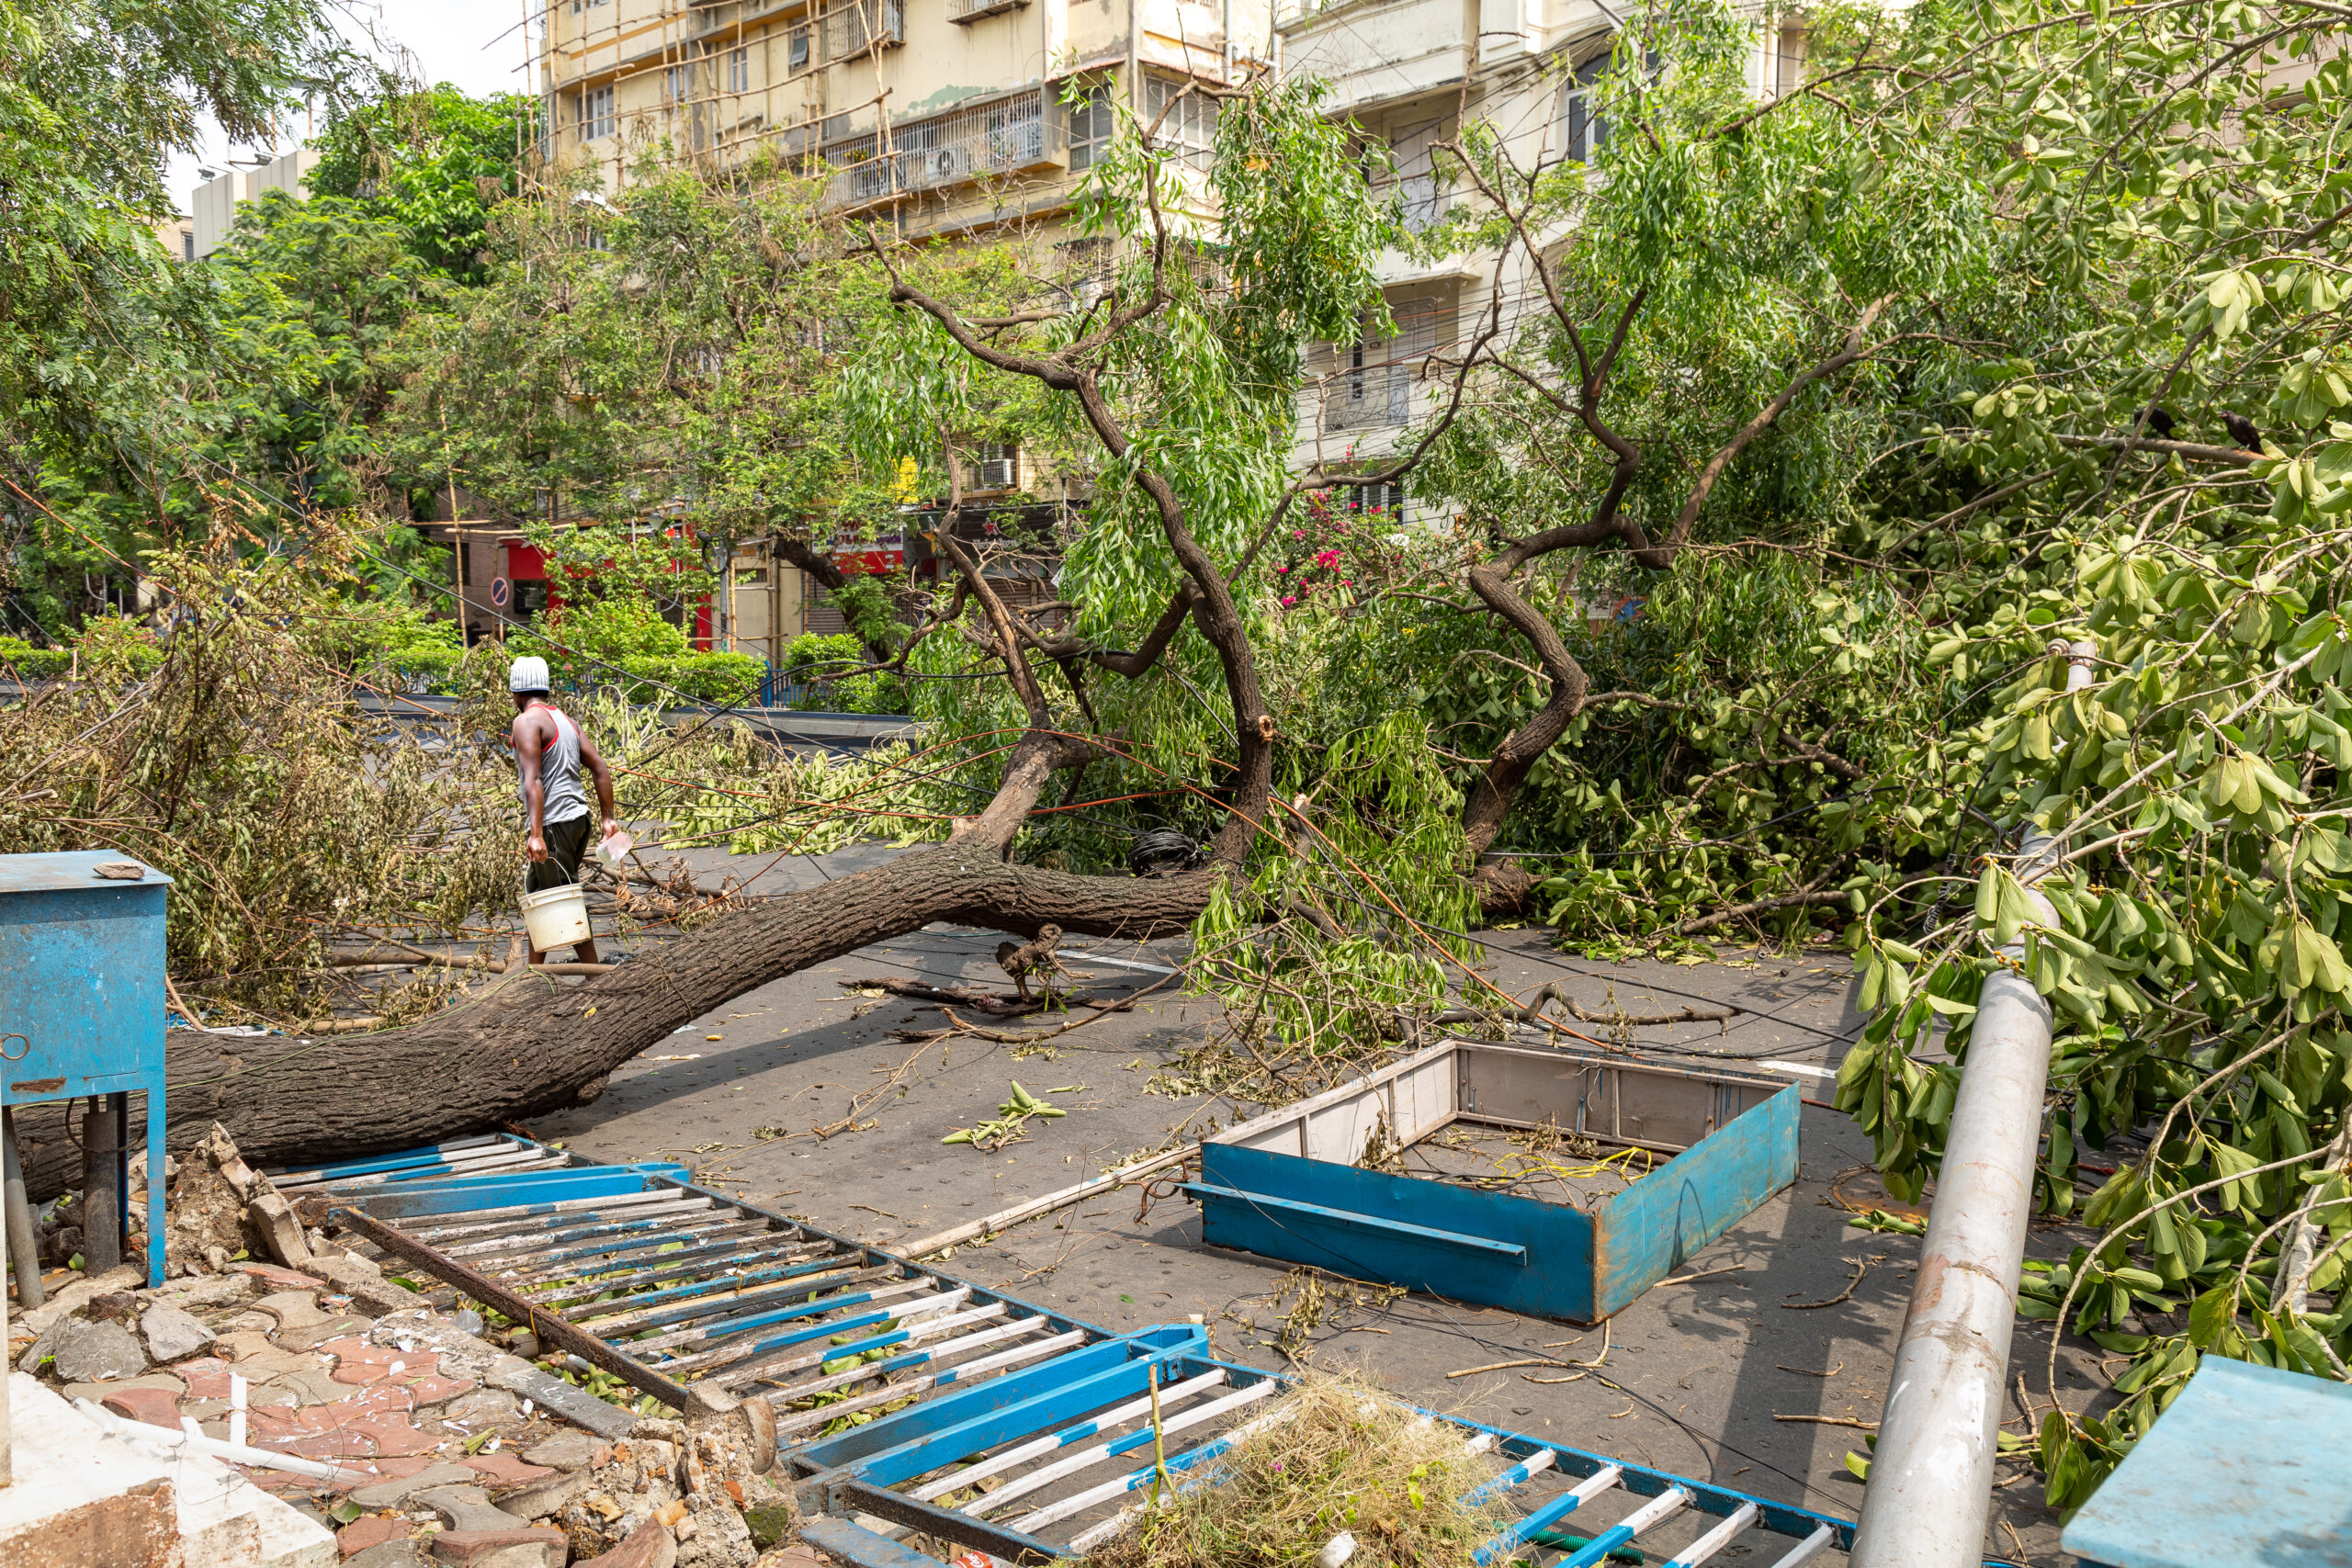 Climate Change Impacts on Typhoon Season